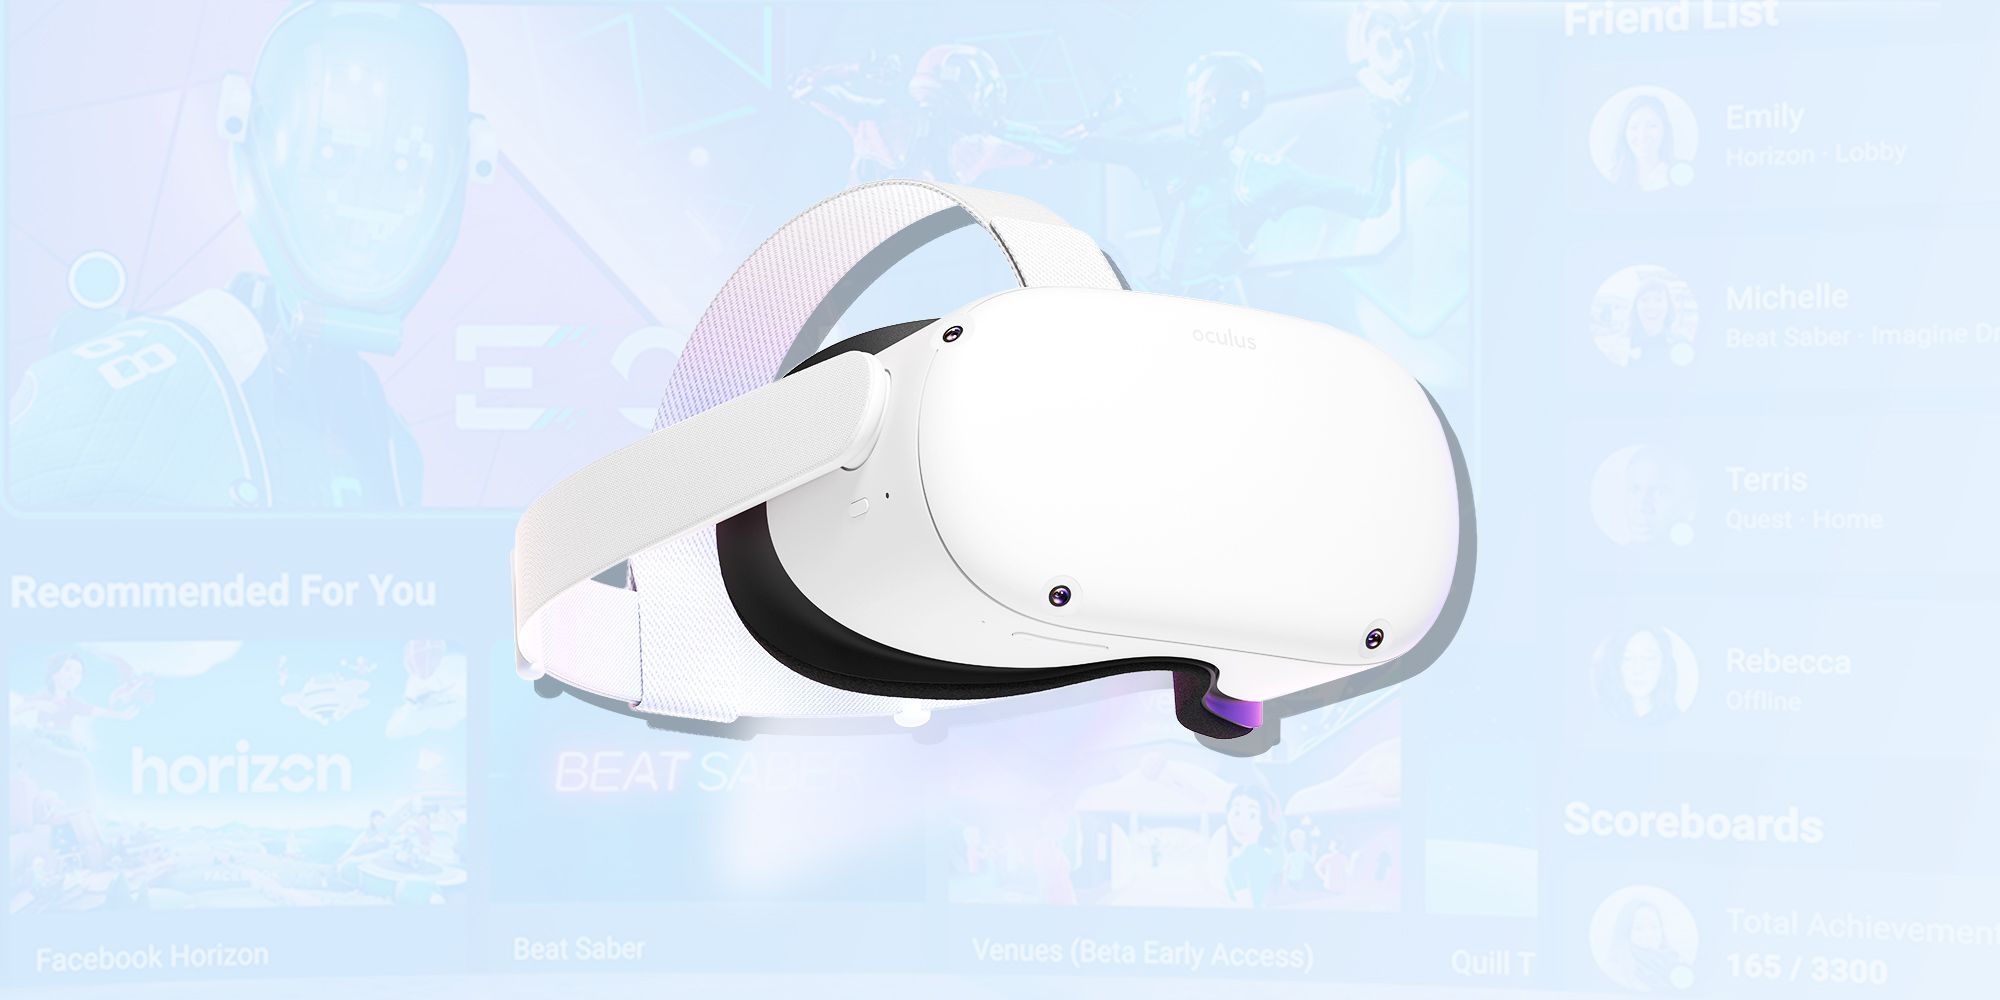 virtual reality headset games